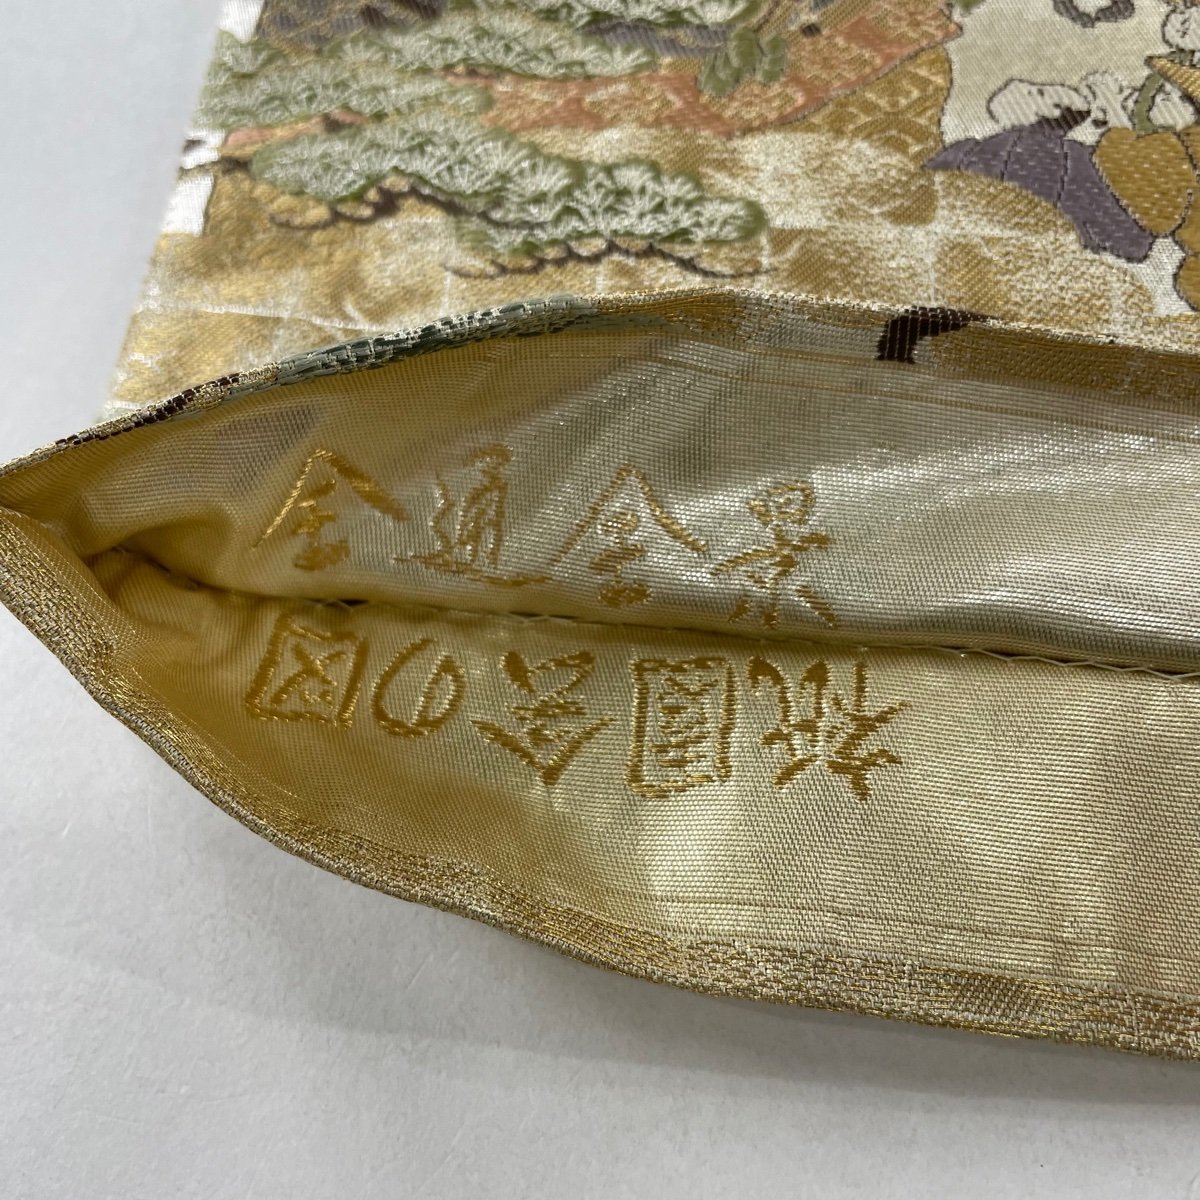 人気が高い 丸帯 美品 中古 正絹 金色 箔 金糸 街風景 祇園会の図